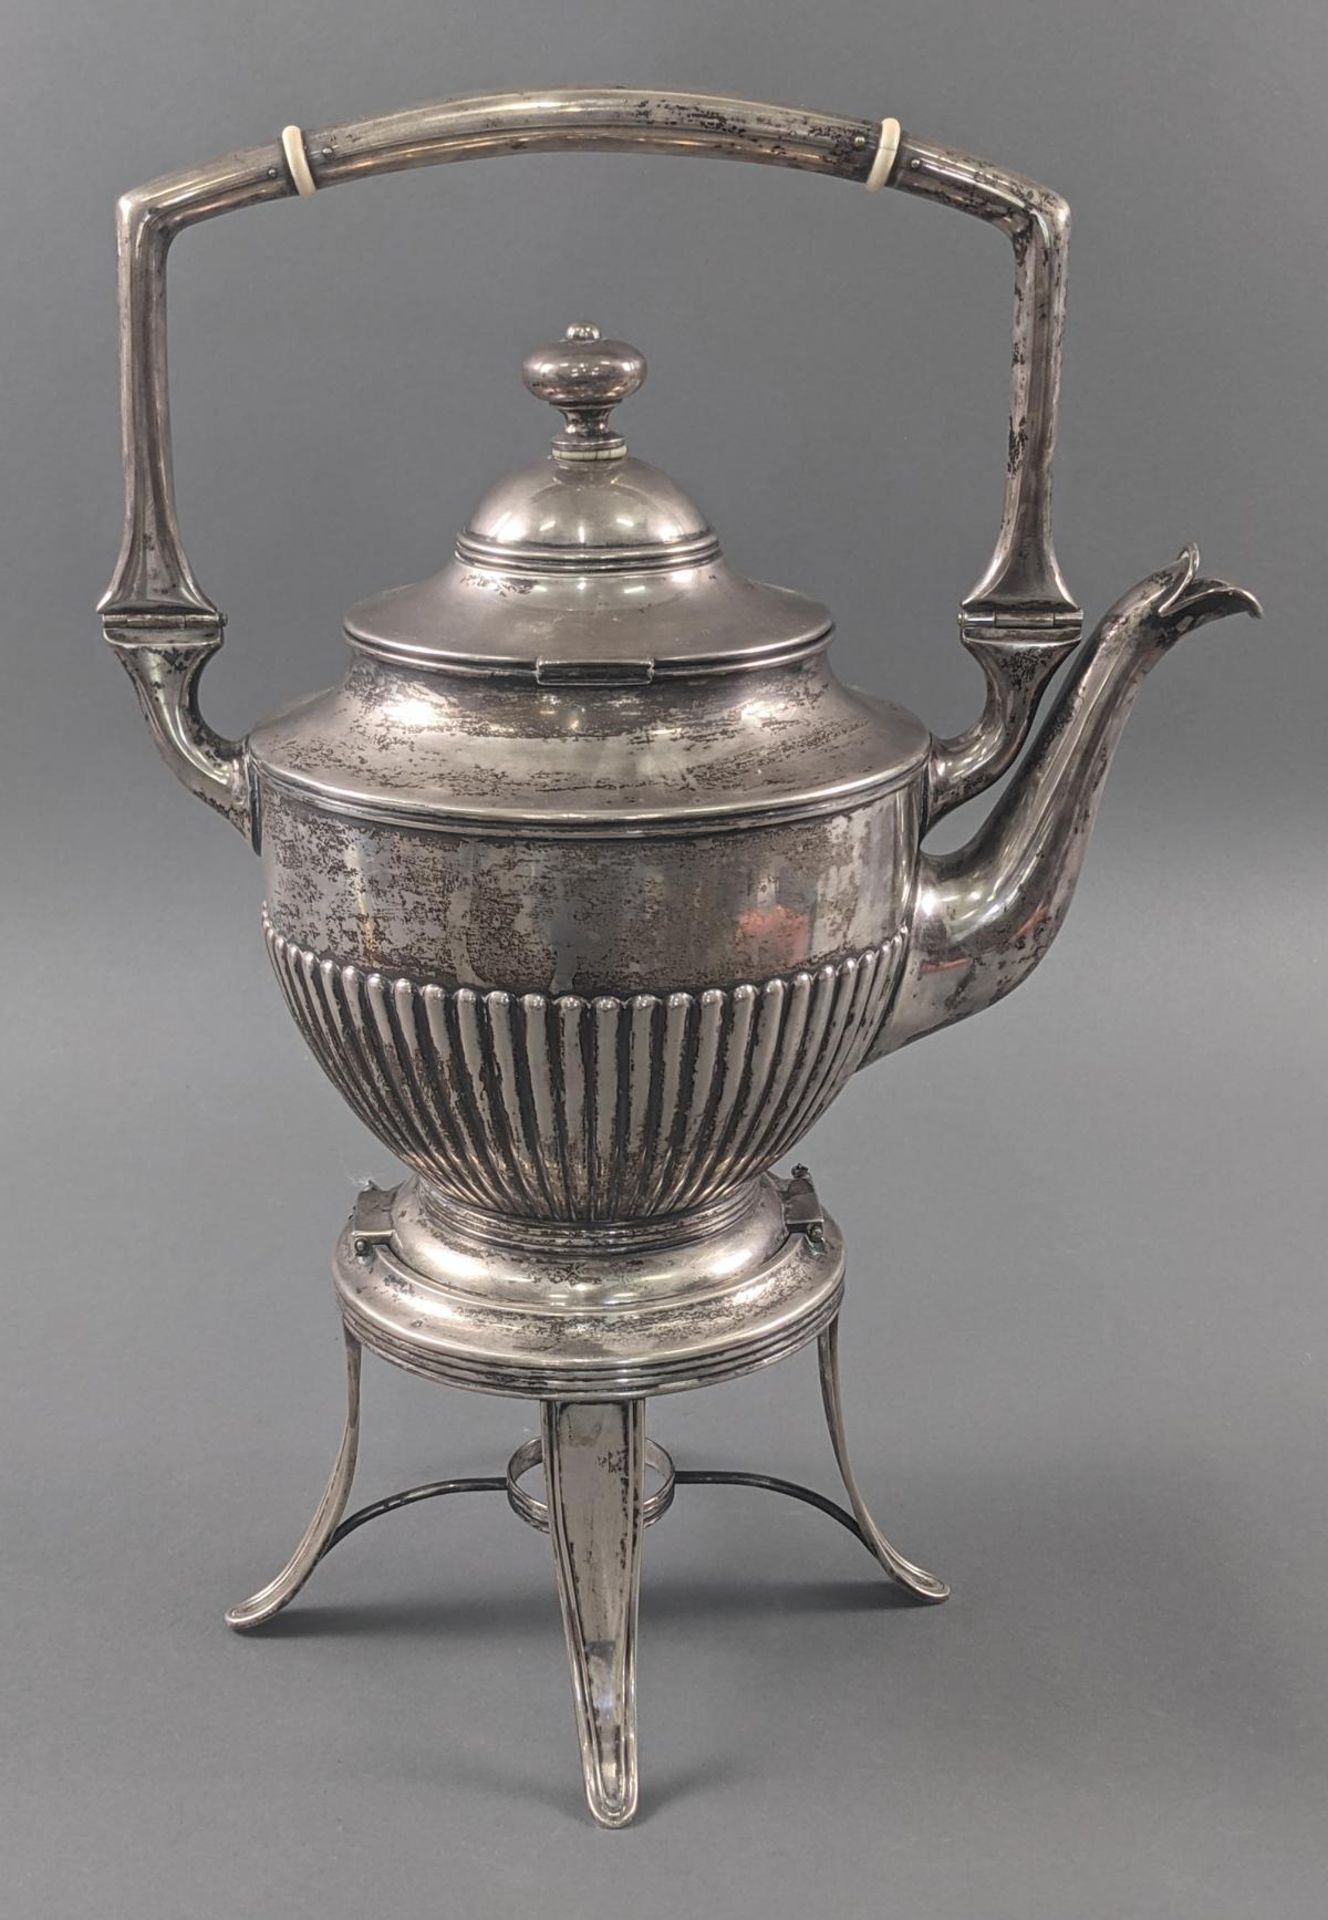 Teekessel auf Rechaud, England um 1900, Silber geprüft - Image 2 of 6